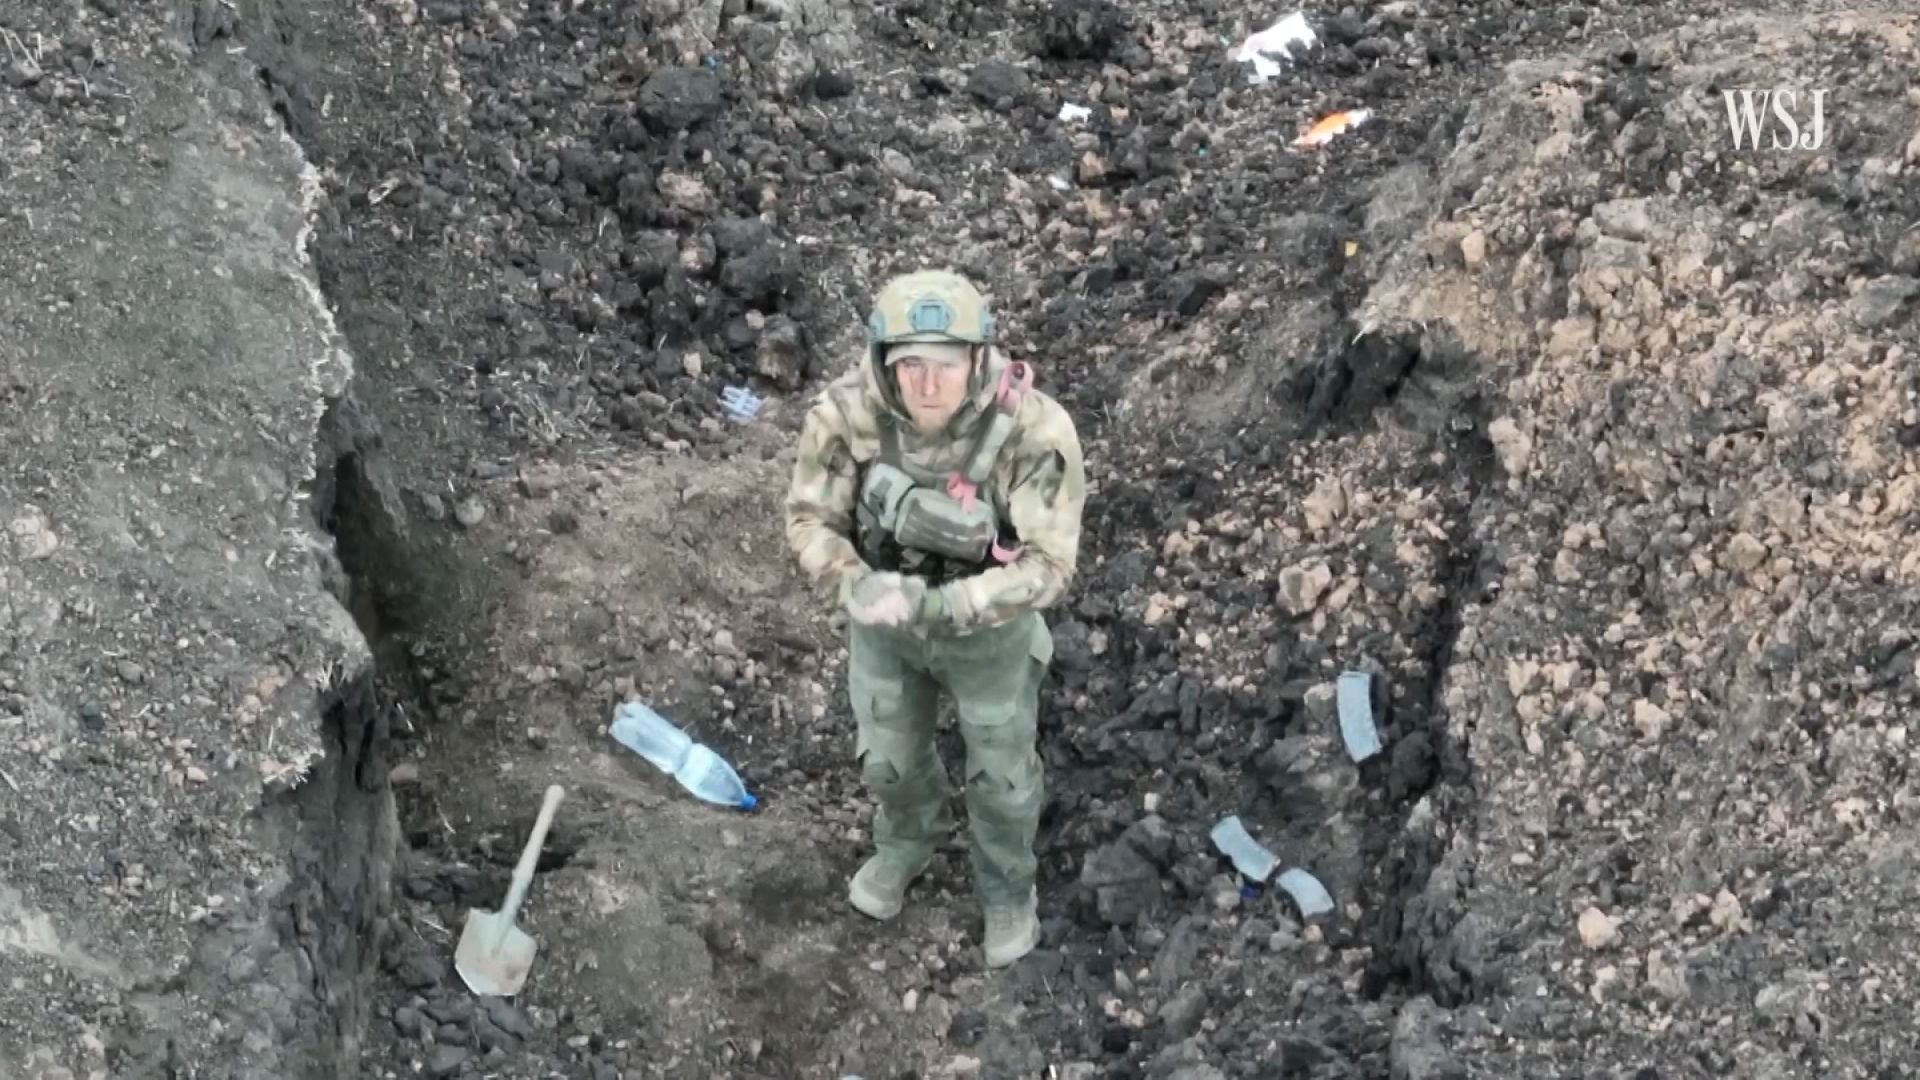 Russian soldier surrendered to Ukrainian drone on Bakhmut battlefield, report says | CNN